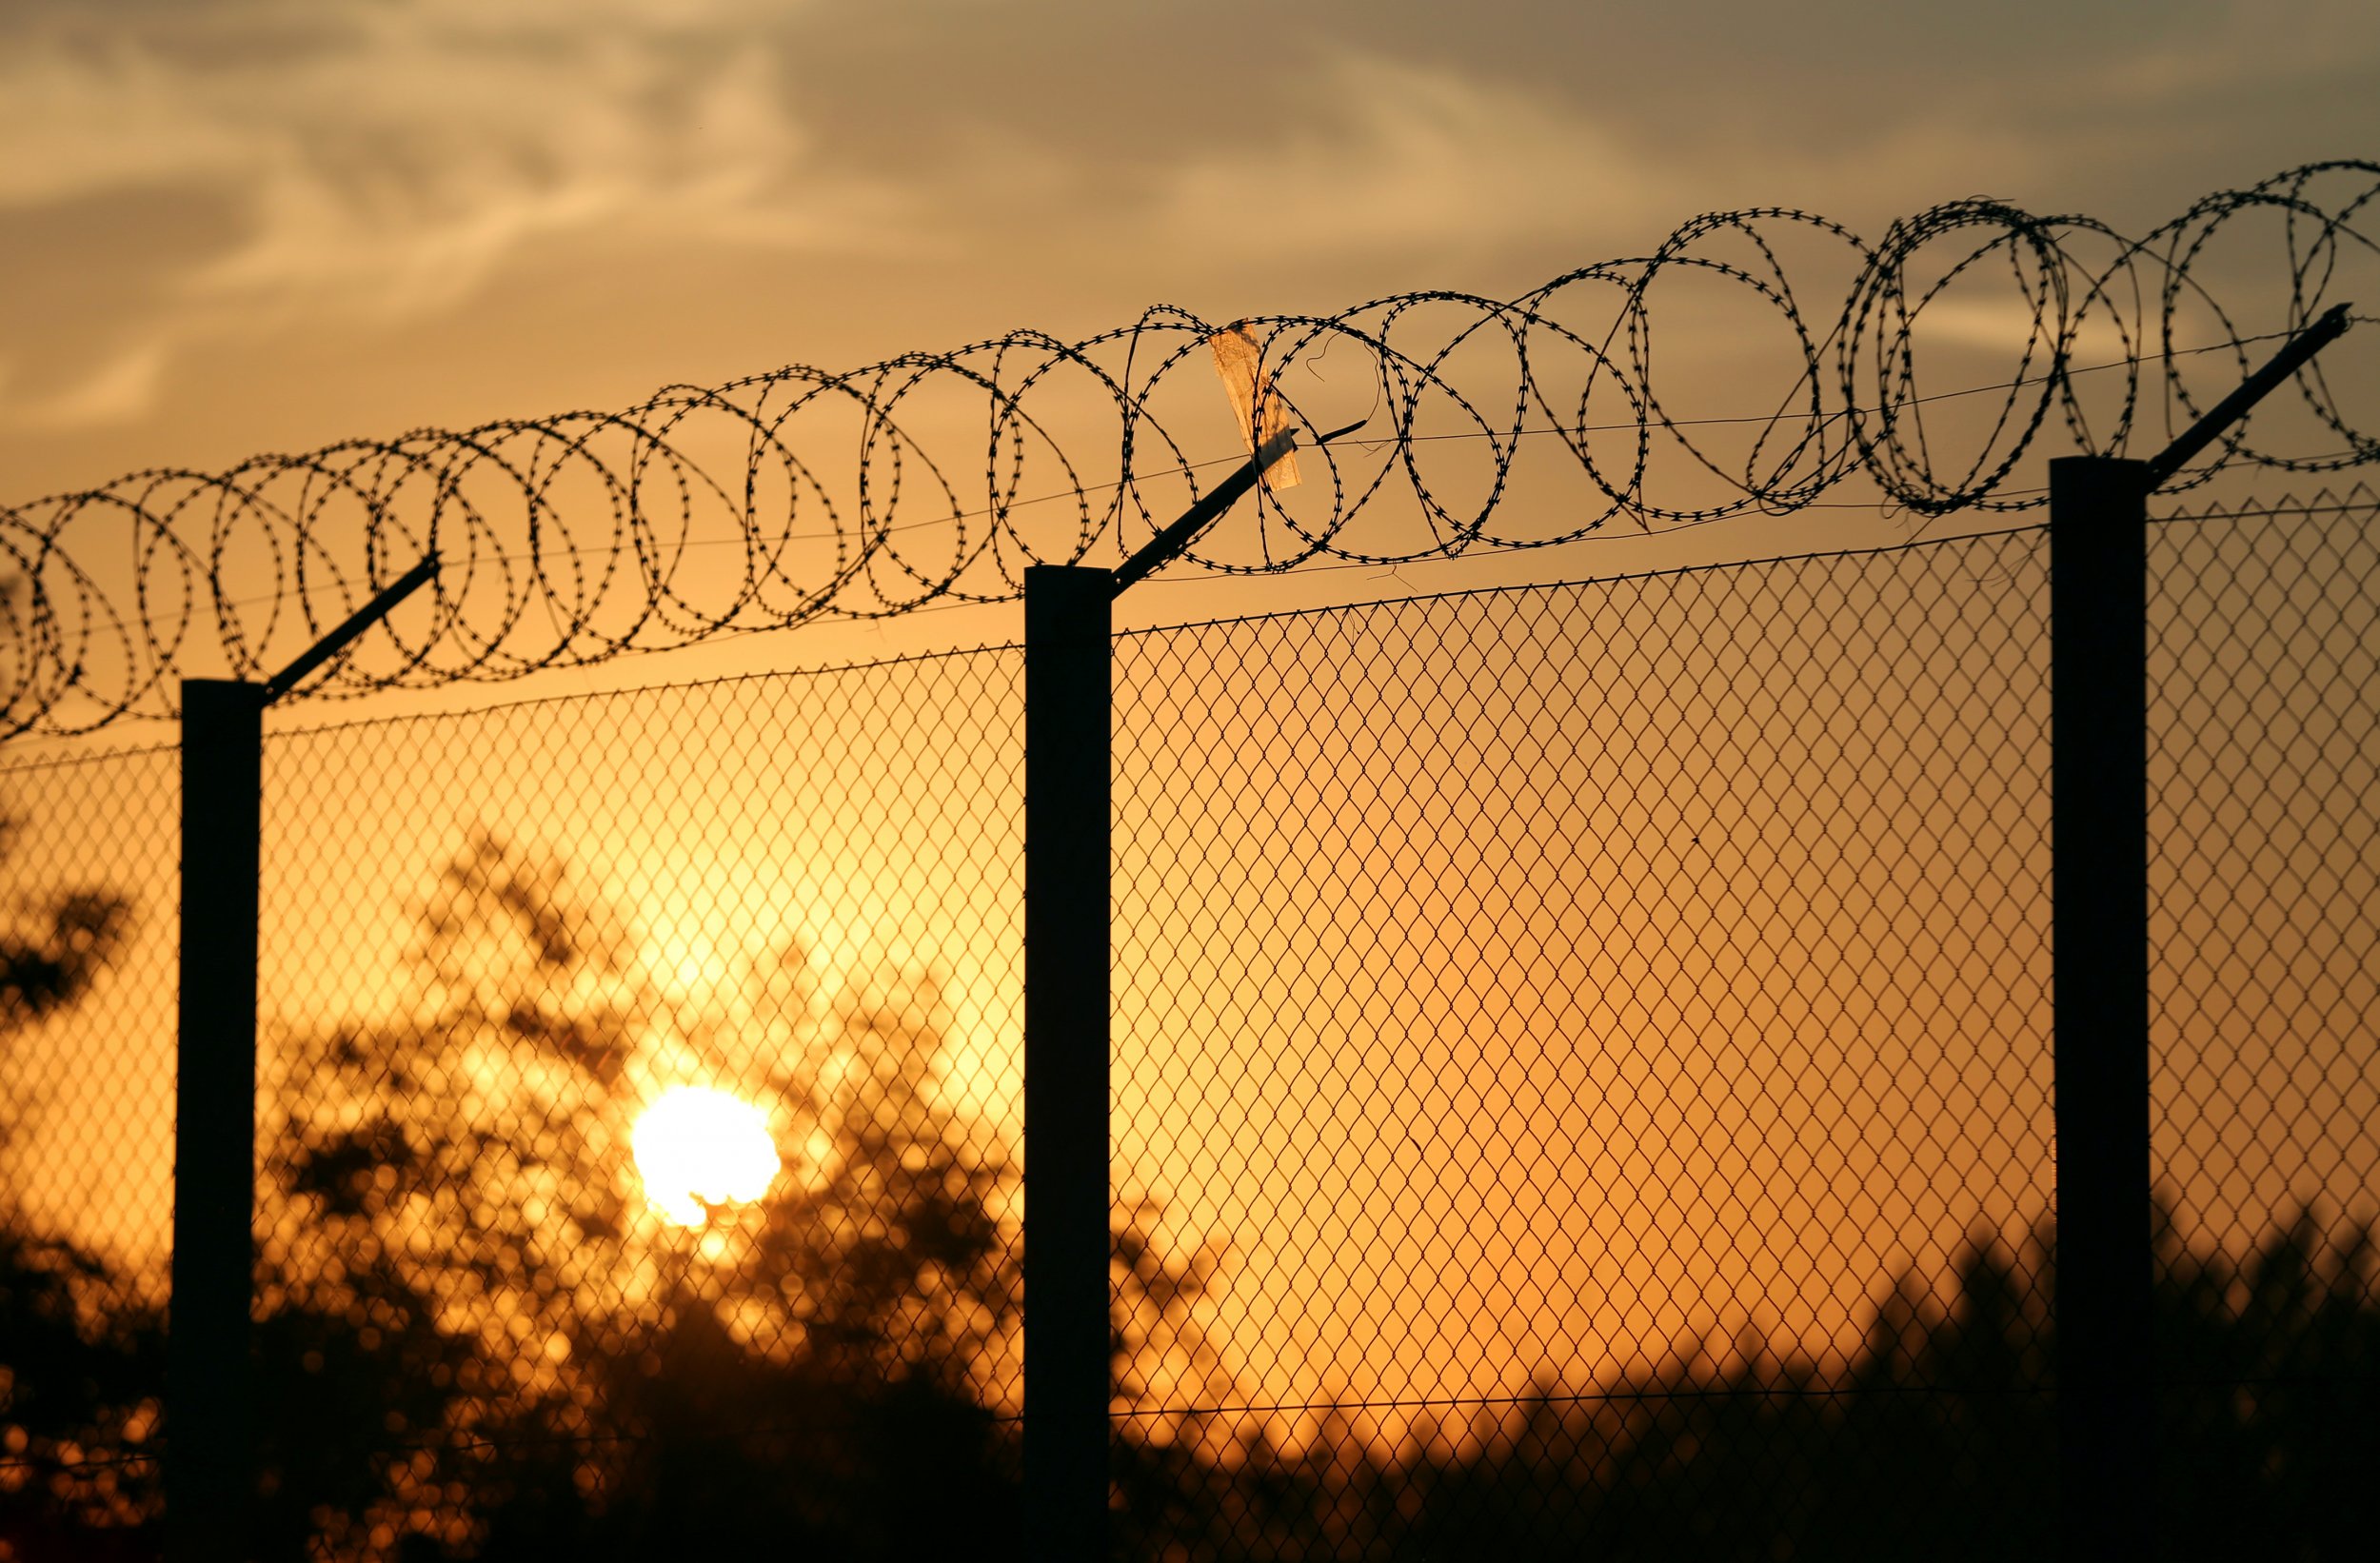 Hungary-Serbia border fence